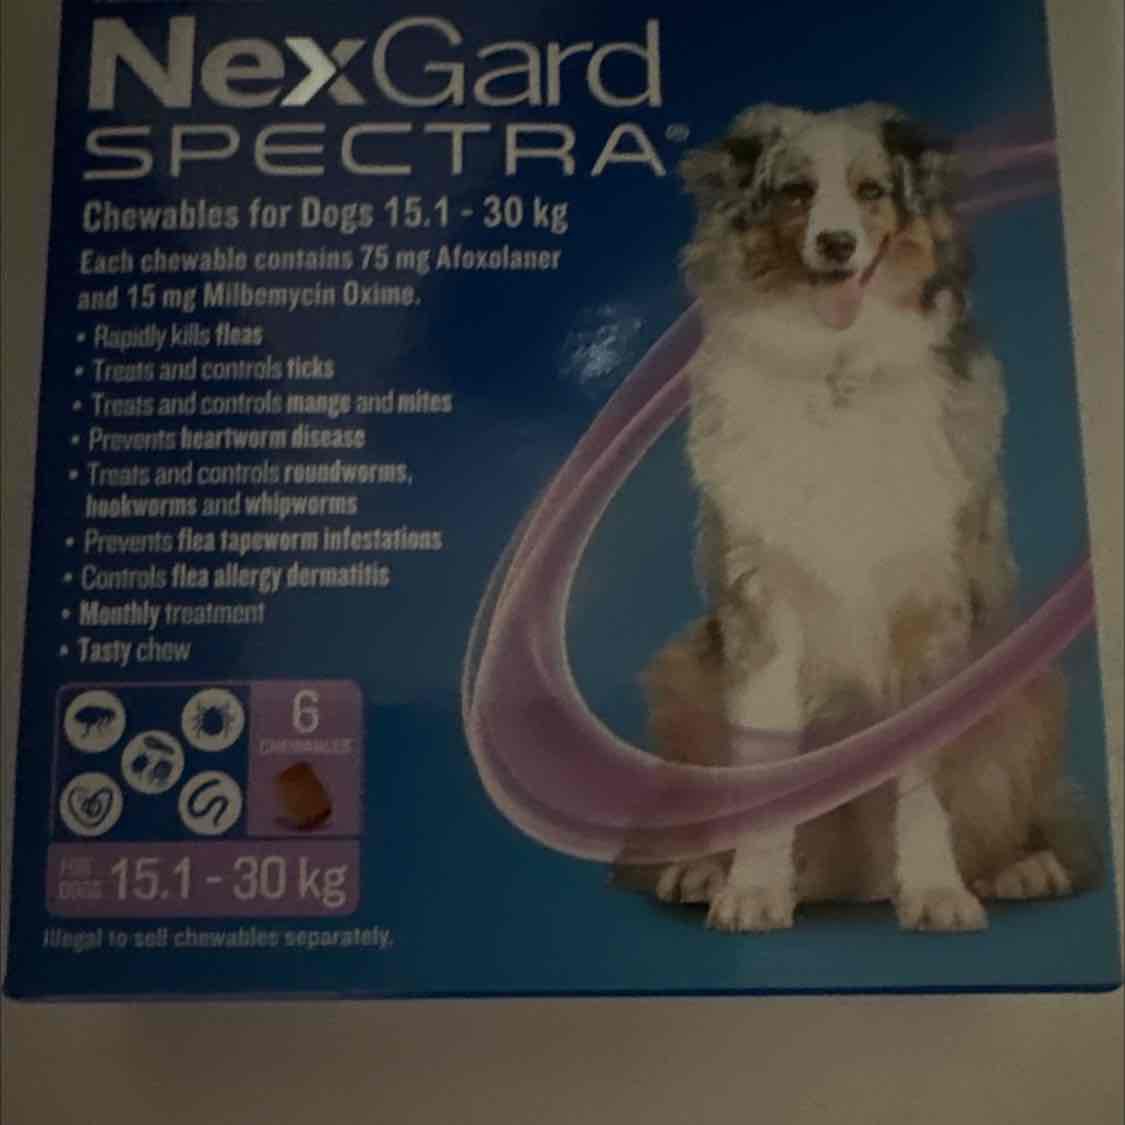 NEXGARD SPECTRA CHEWS FOR MEDIUM DOGS (GREEN) (7.5-15KG) 3'S